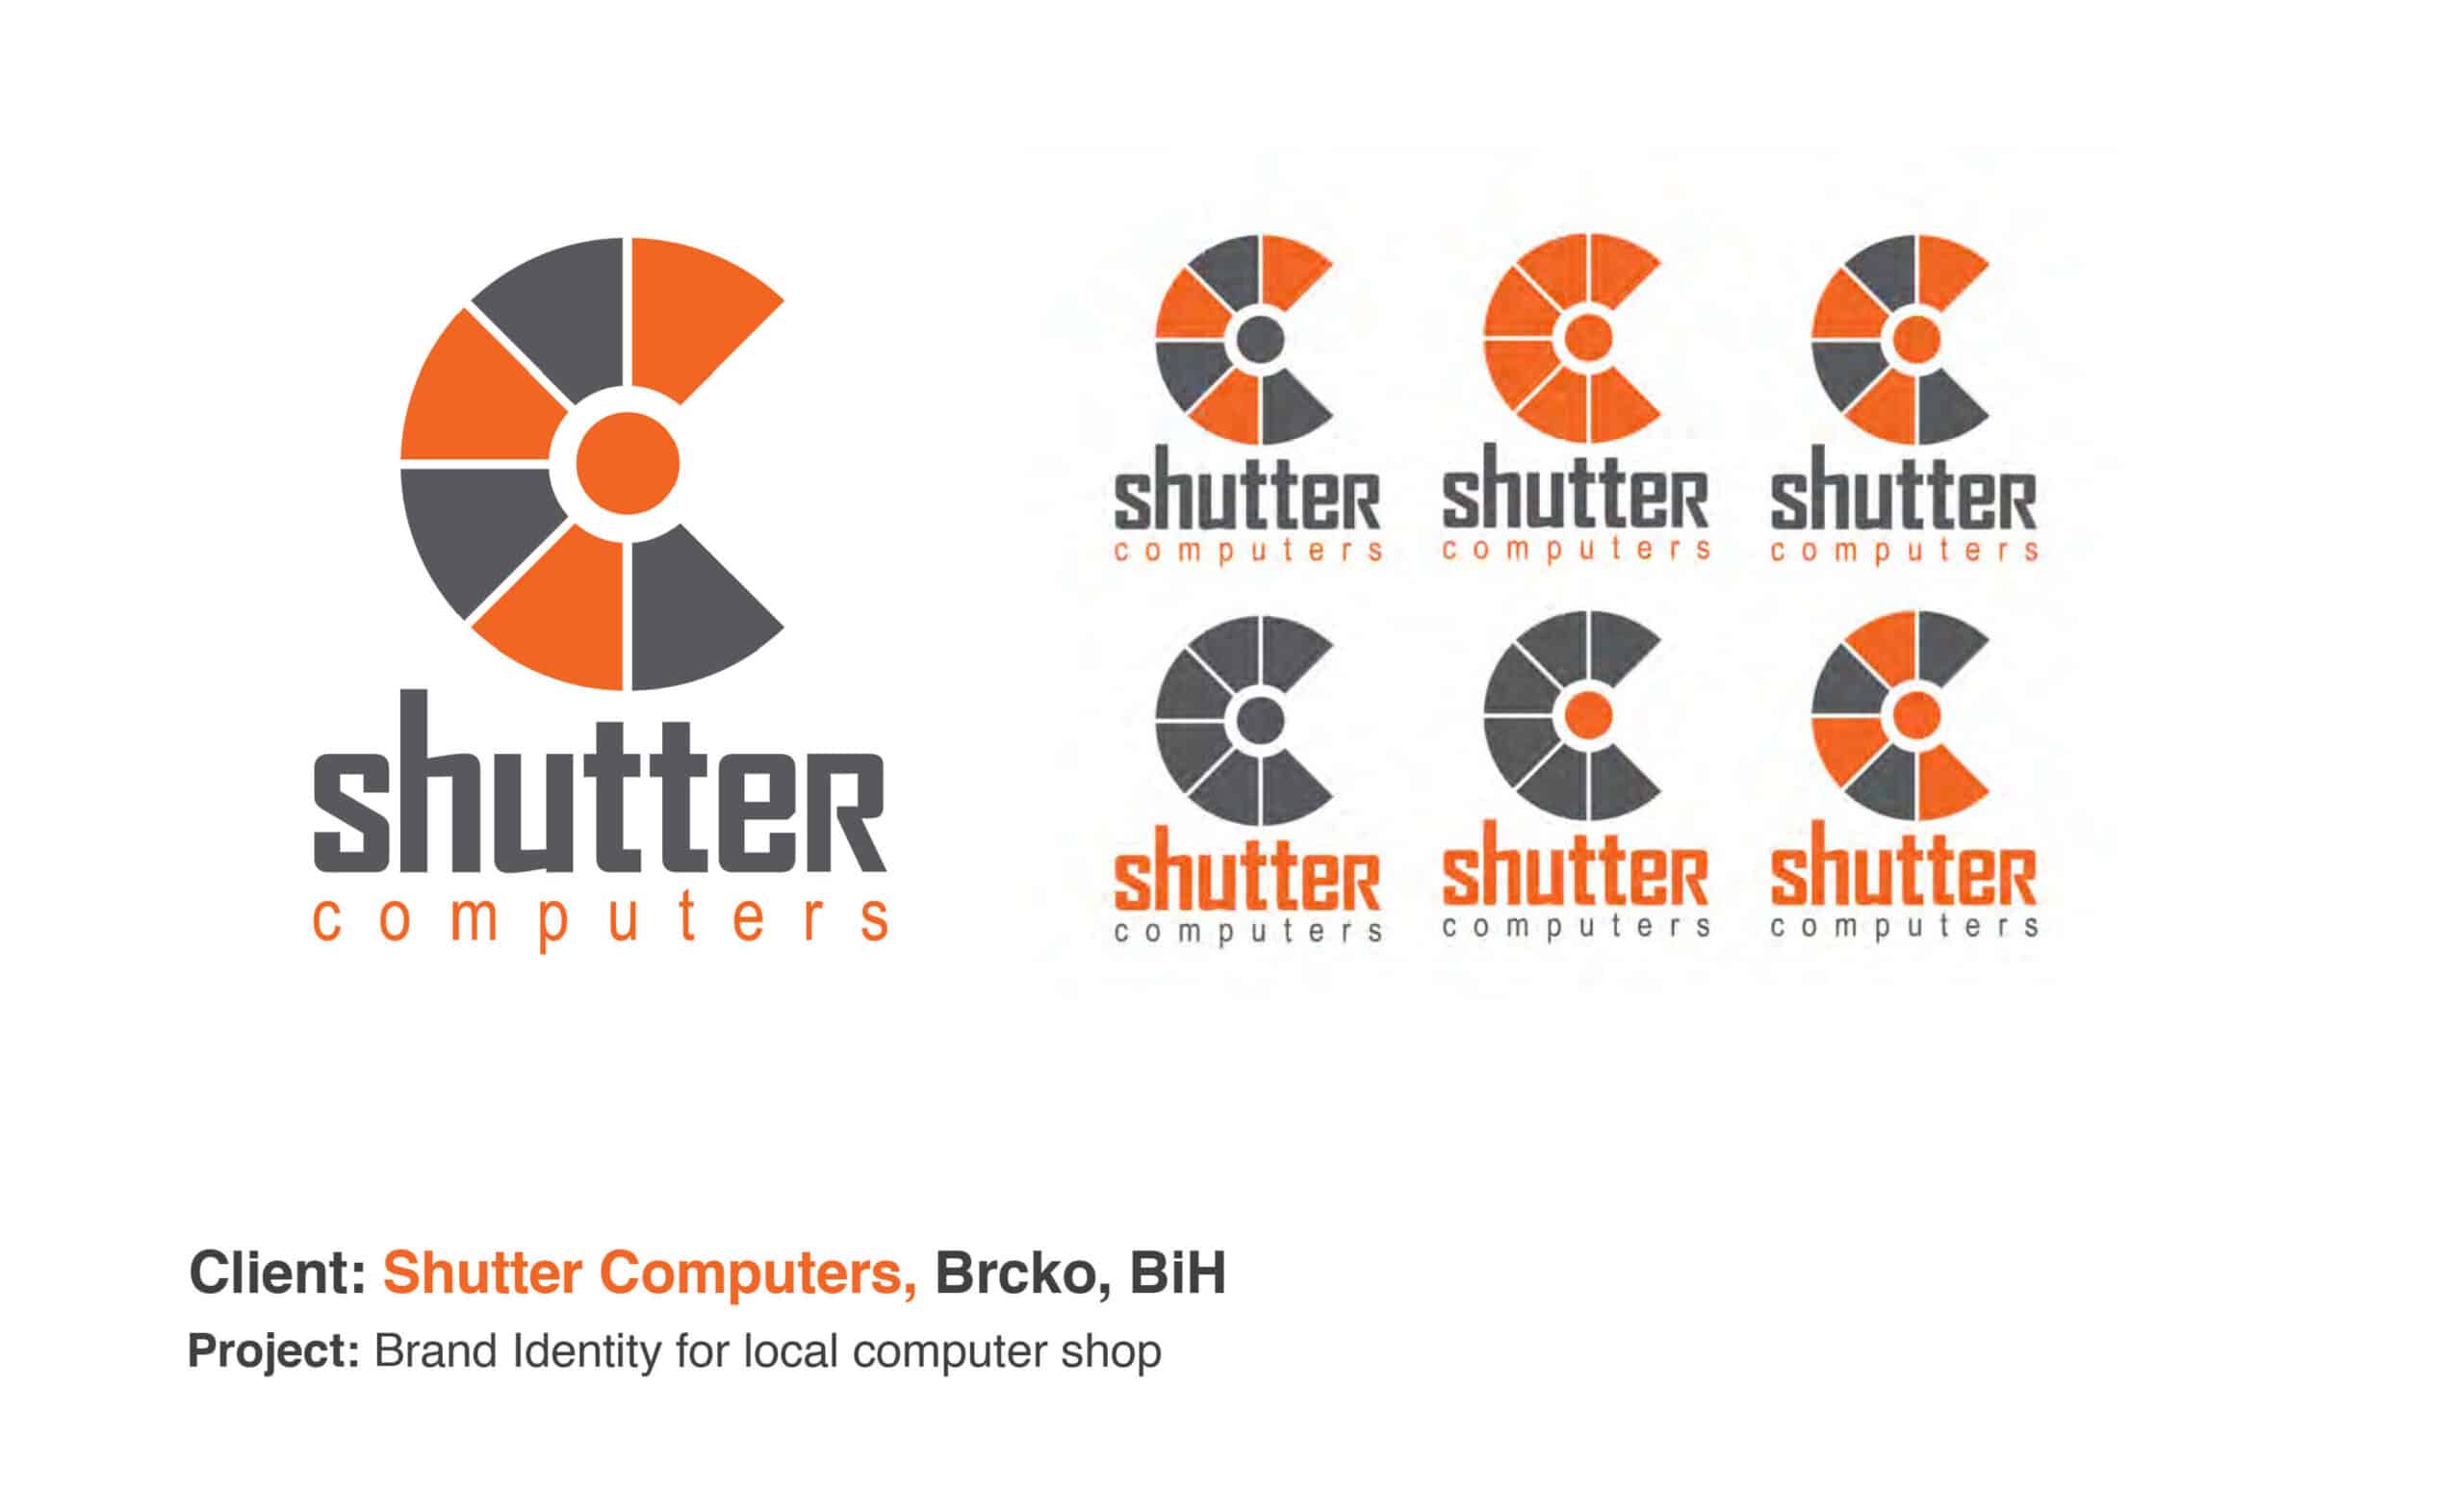 Our Client: Shutter Computers logo